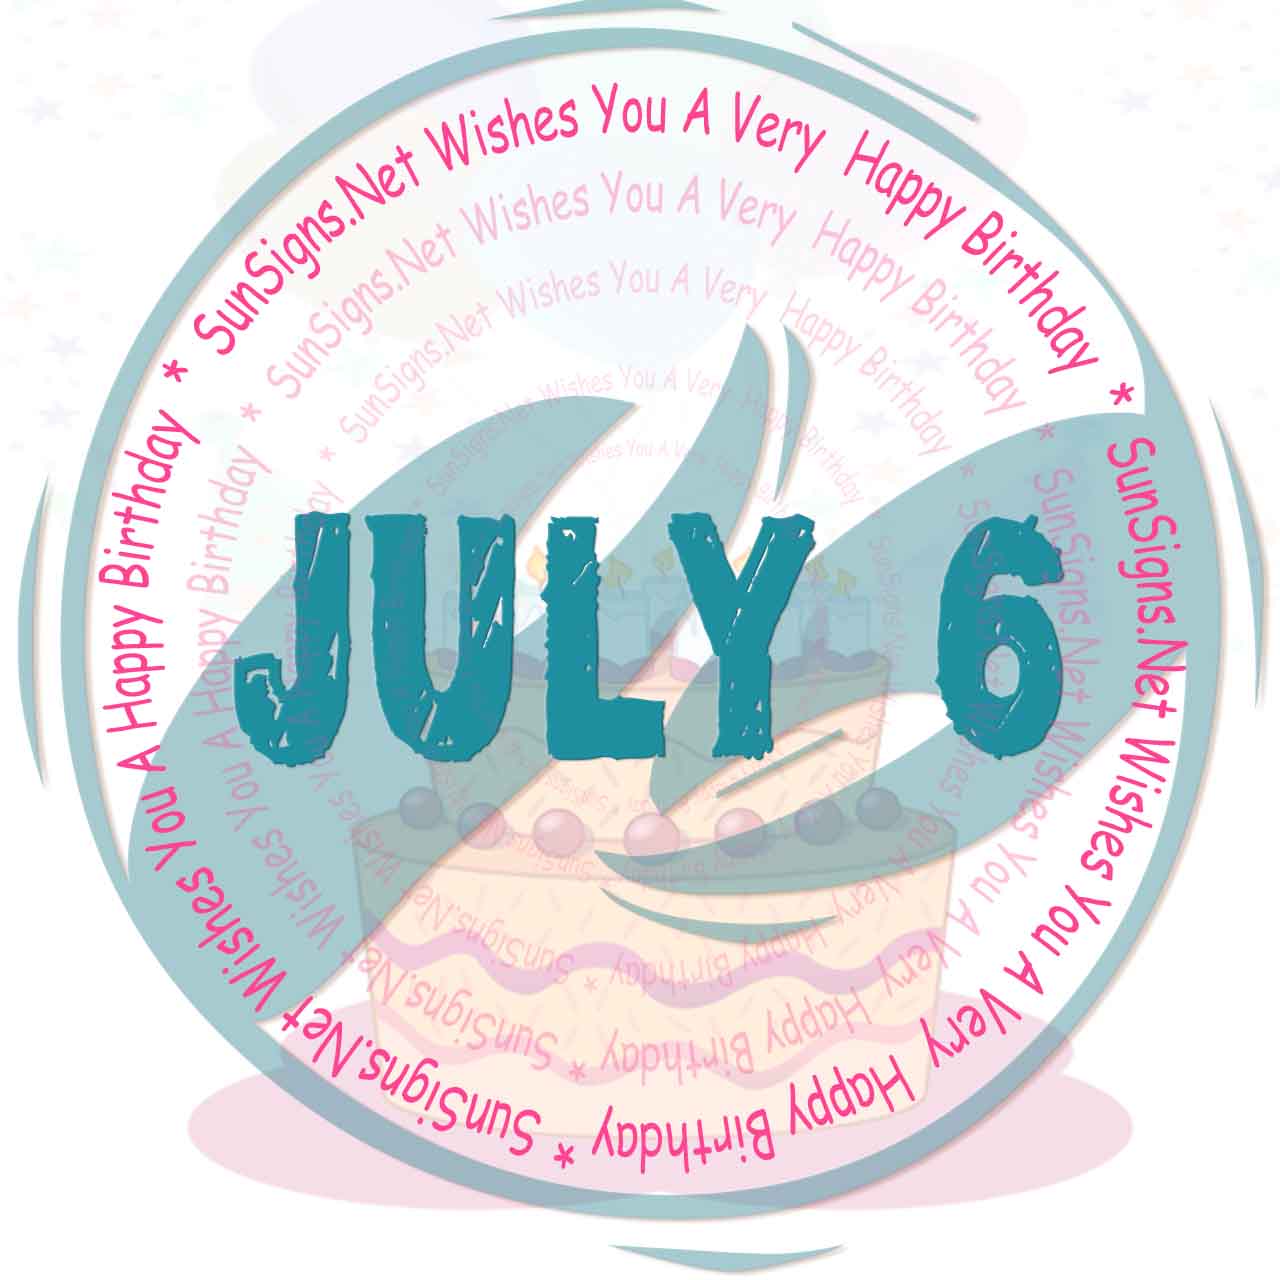 July 6 Zodiac is Cancer, Birthdays and Horoscope Zodiac Signs 101